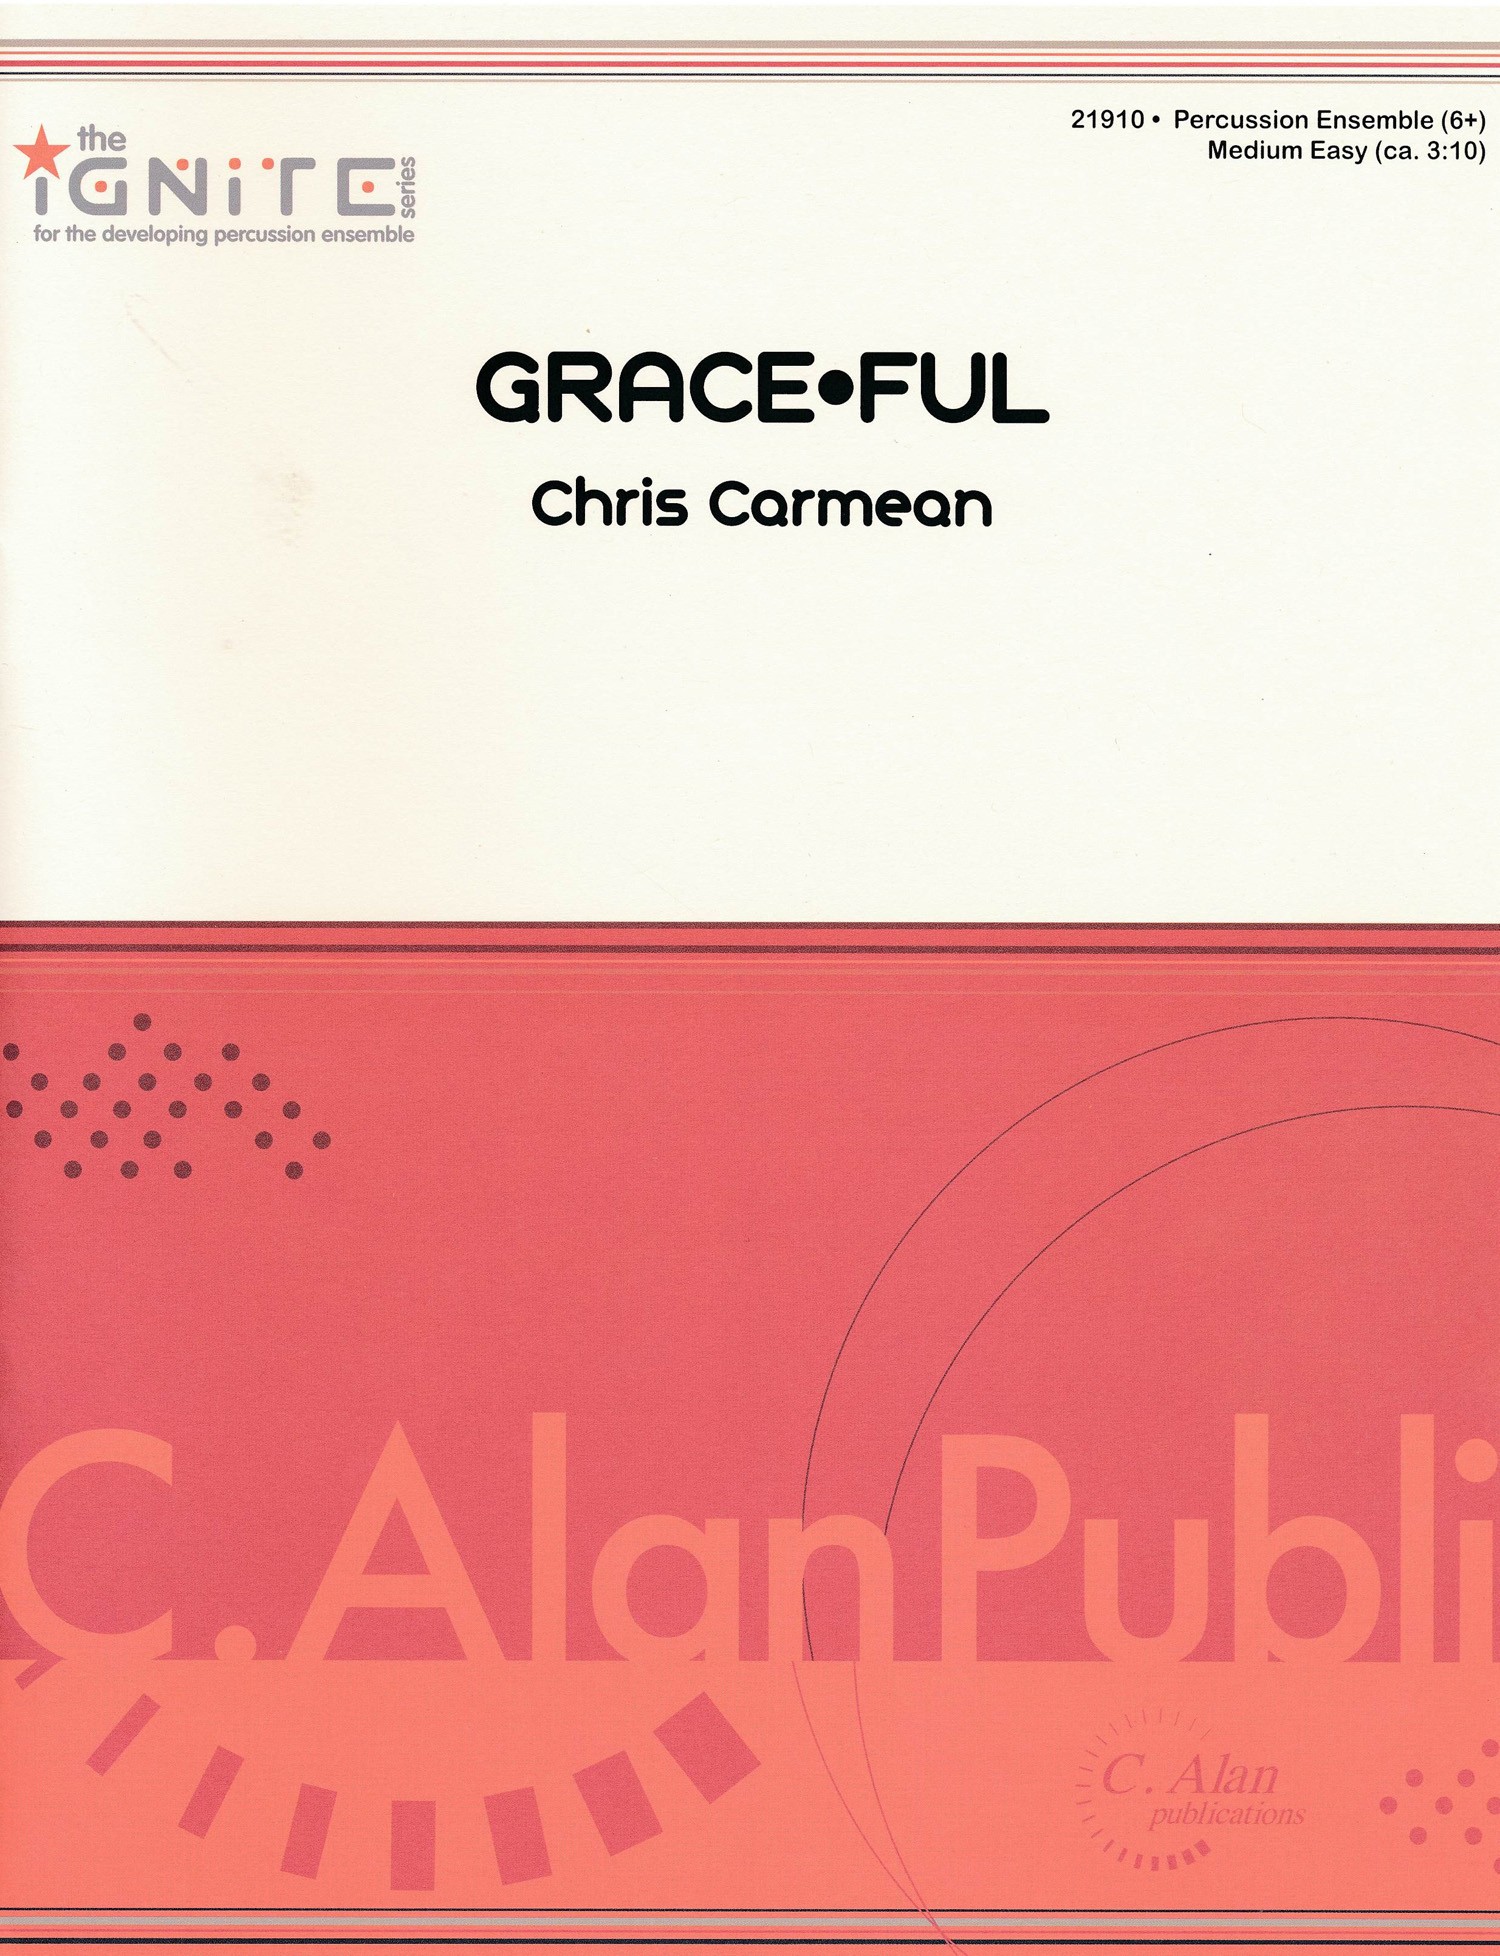 Grace-ful by Chris Carmean